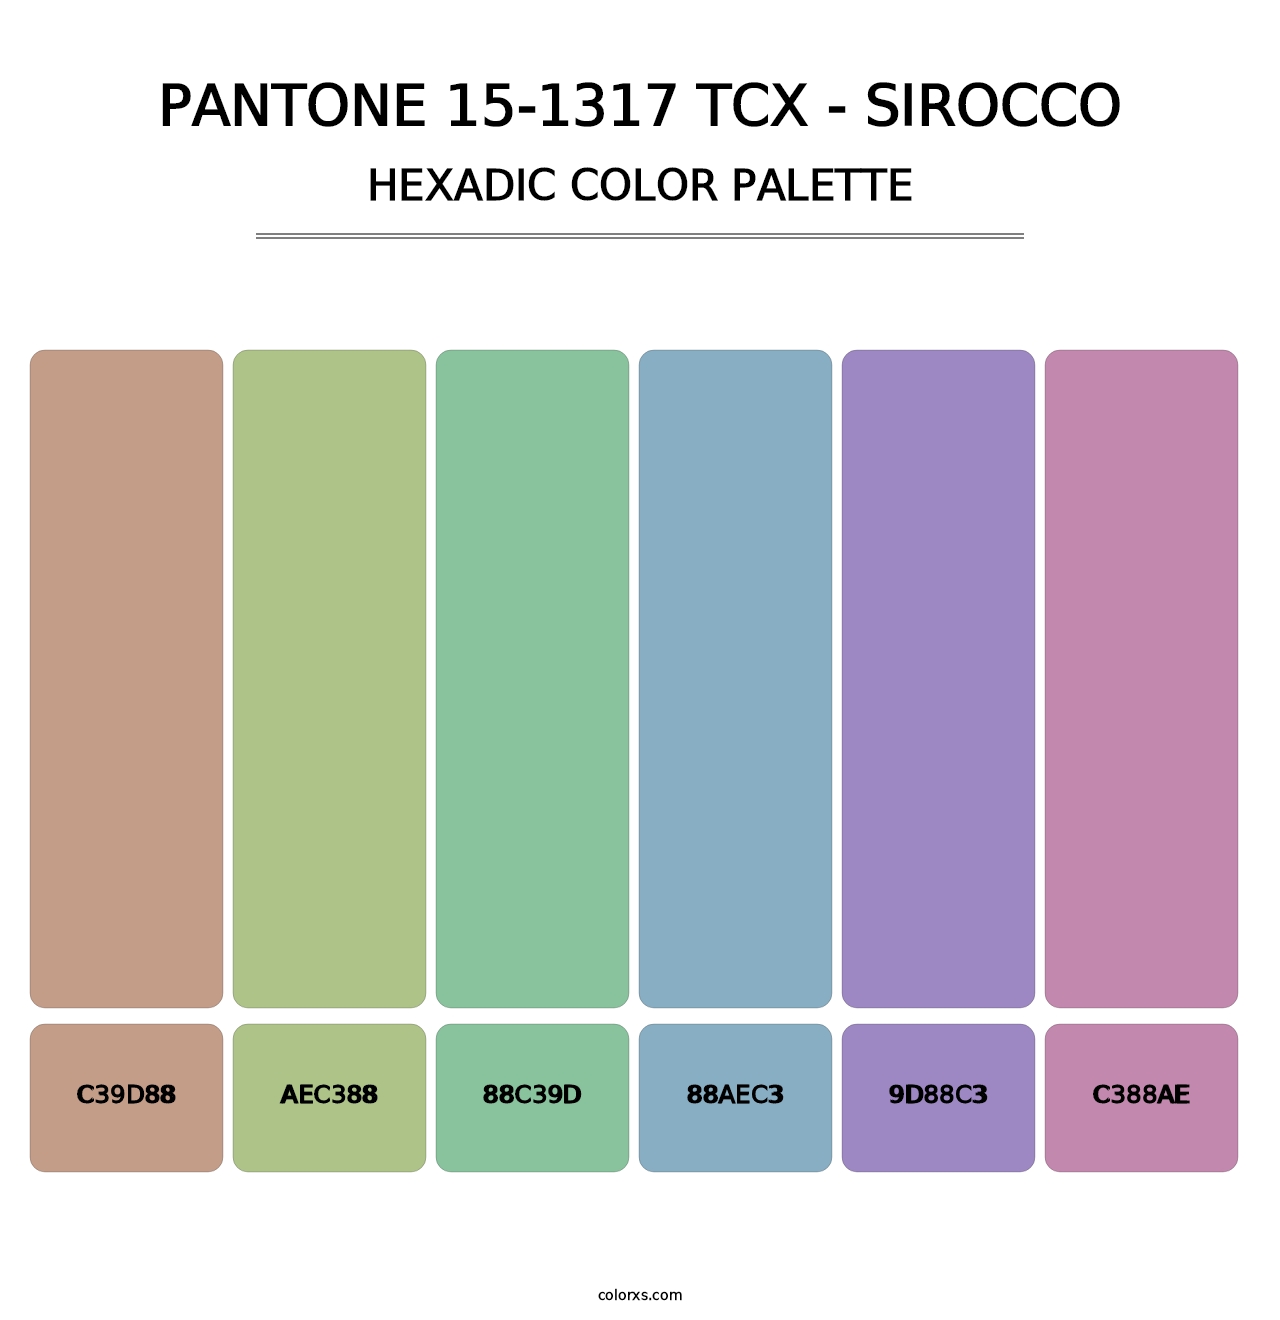 PANTONE 15-1317 TCX - Sirocco - Hexadic Color Palette